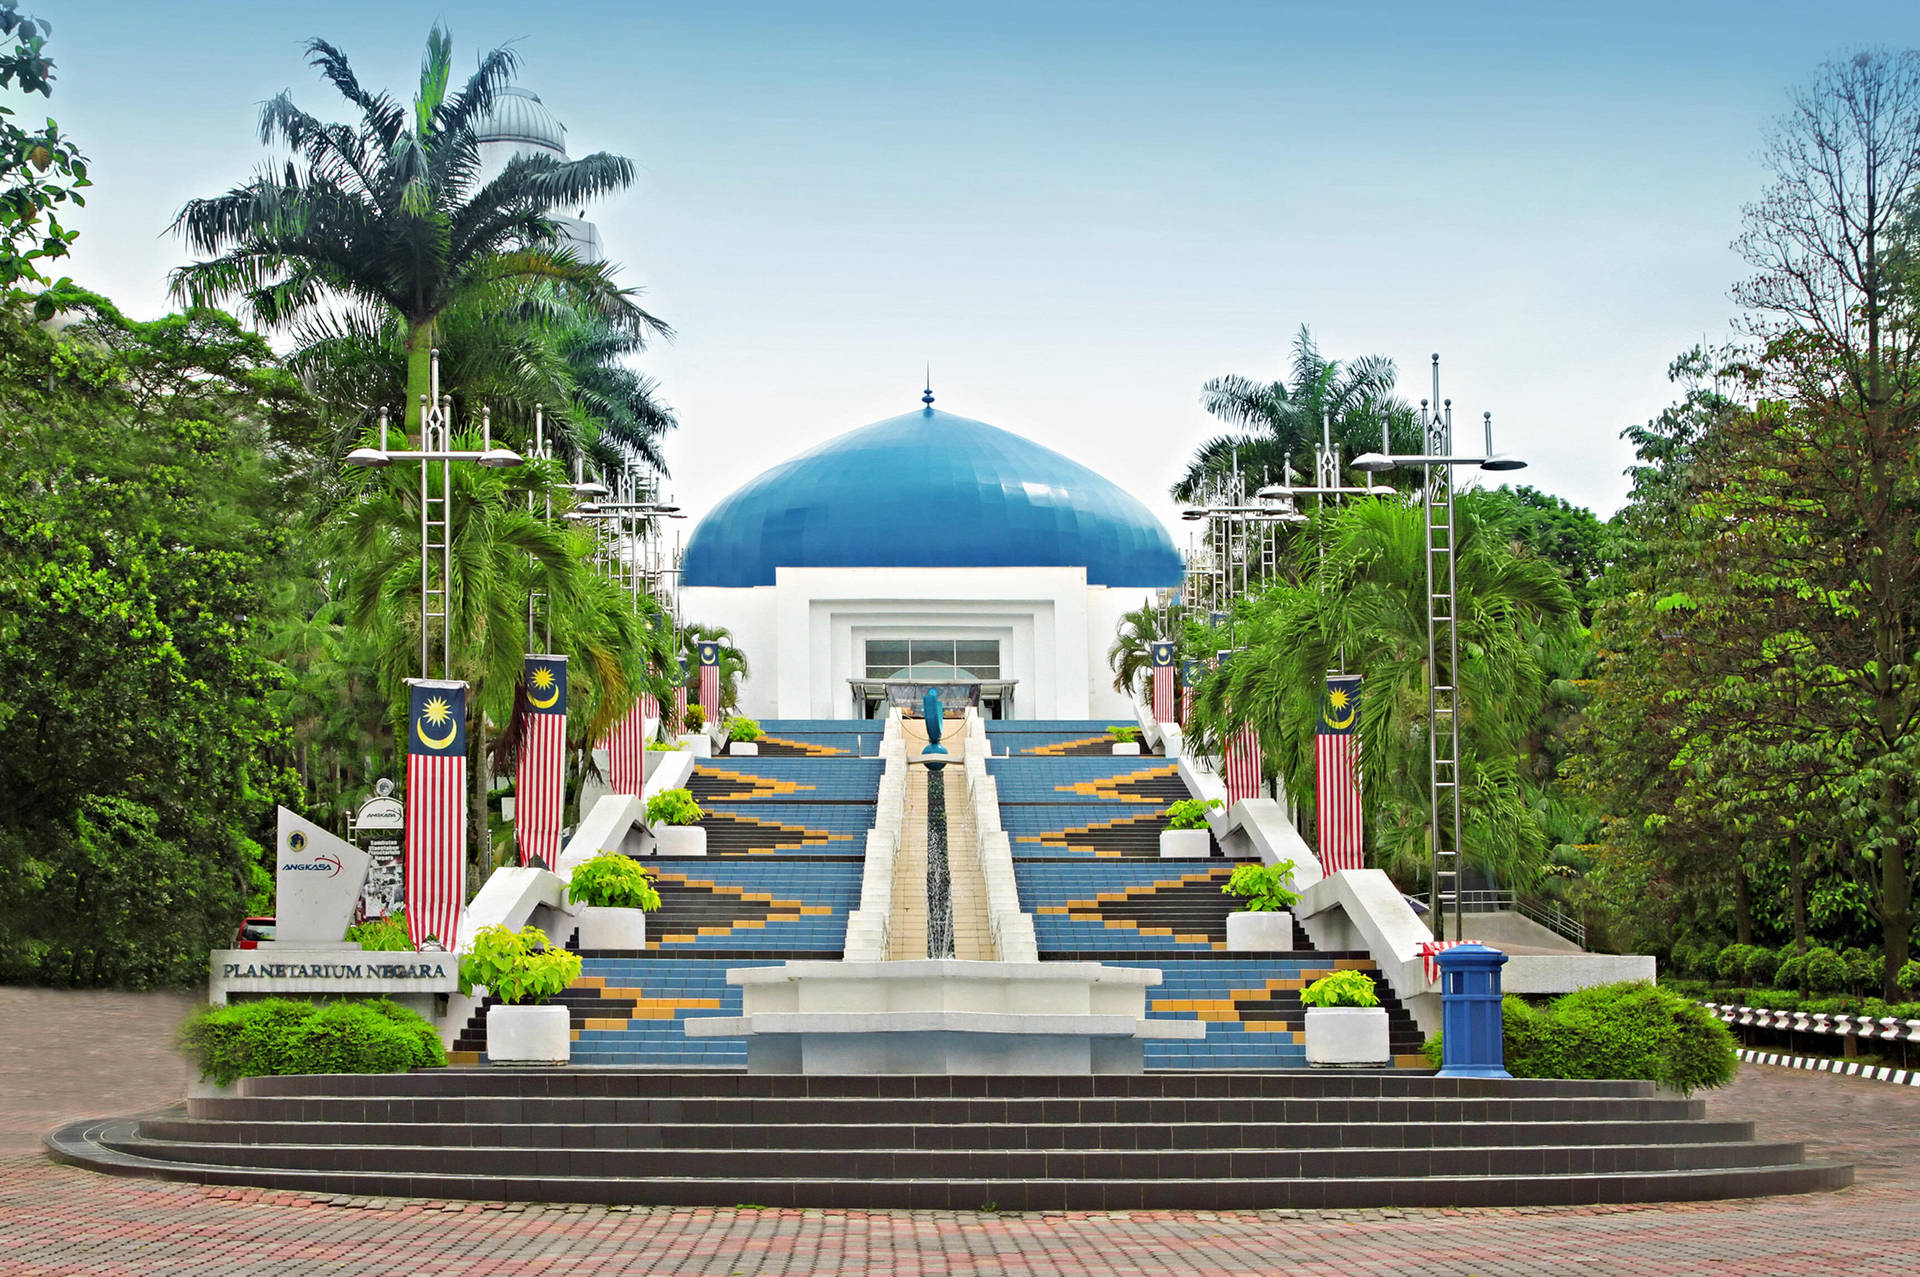 Planetarium Negara In Kuala Lumpur Background